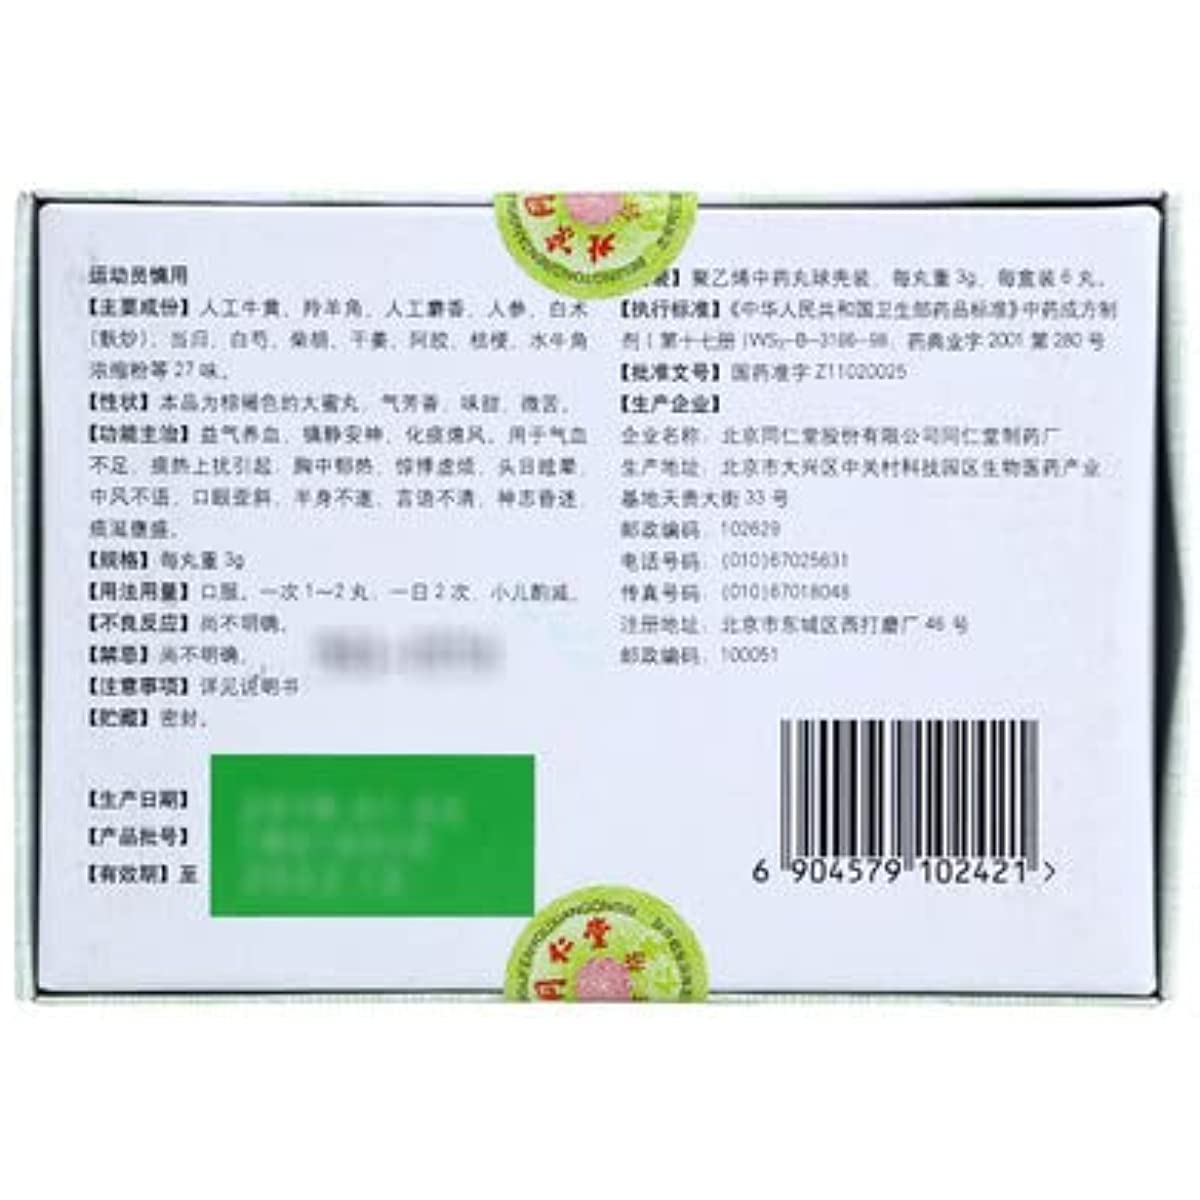 1 Box, Tongrentang Niuhuang Qingxin Wan 3g*6pills/Box 牛黄清心丸